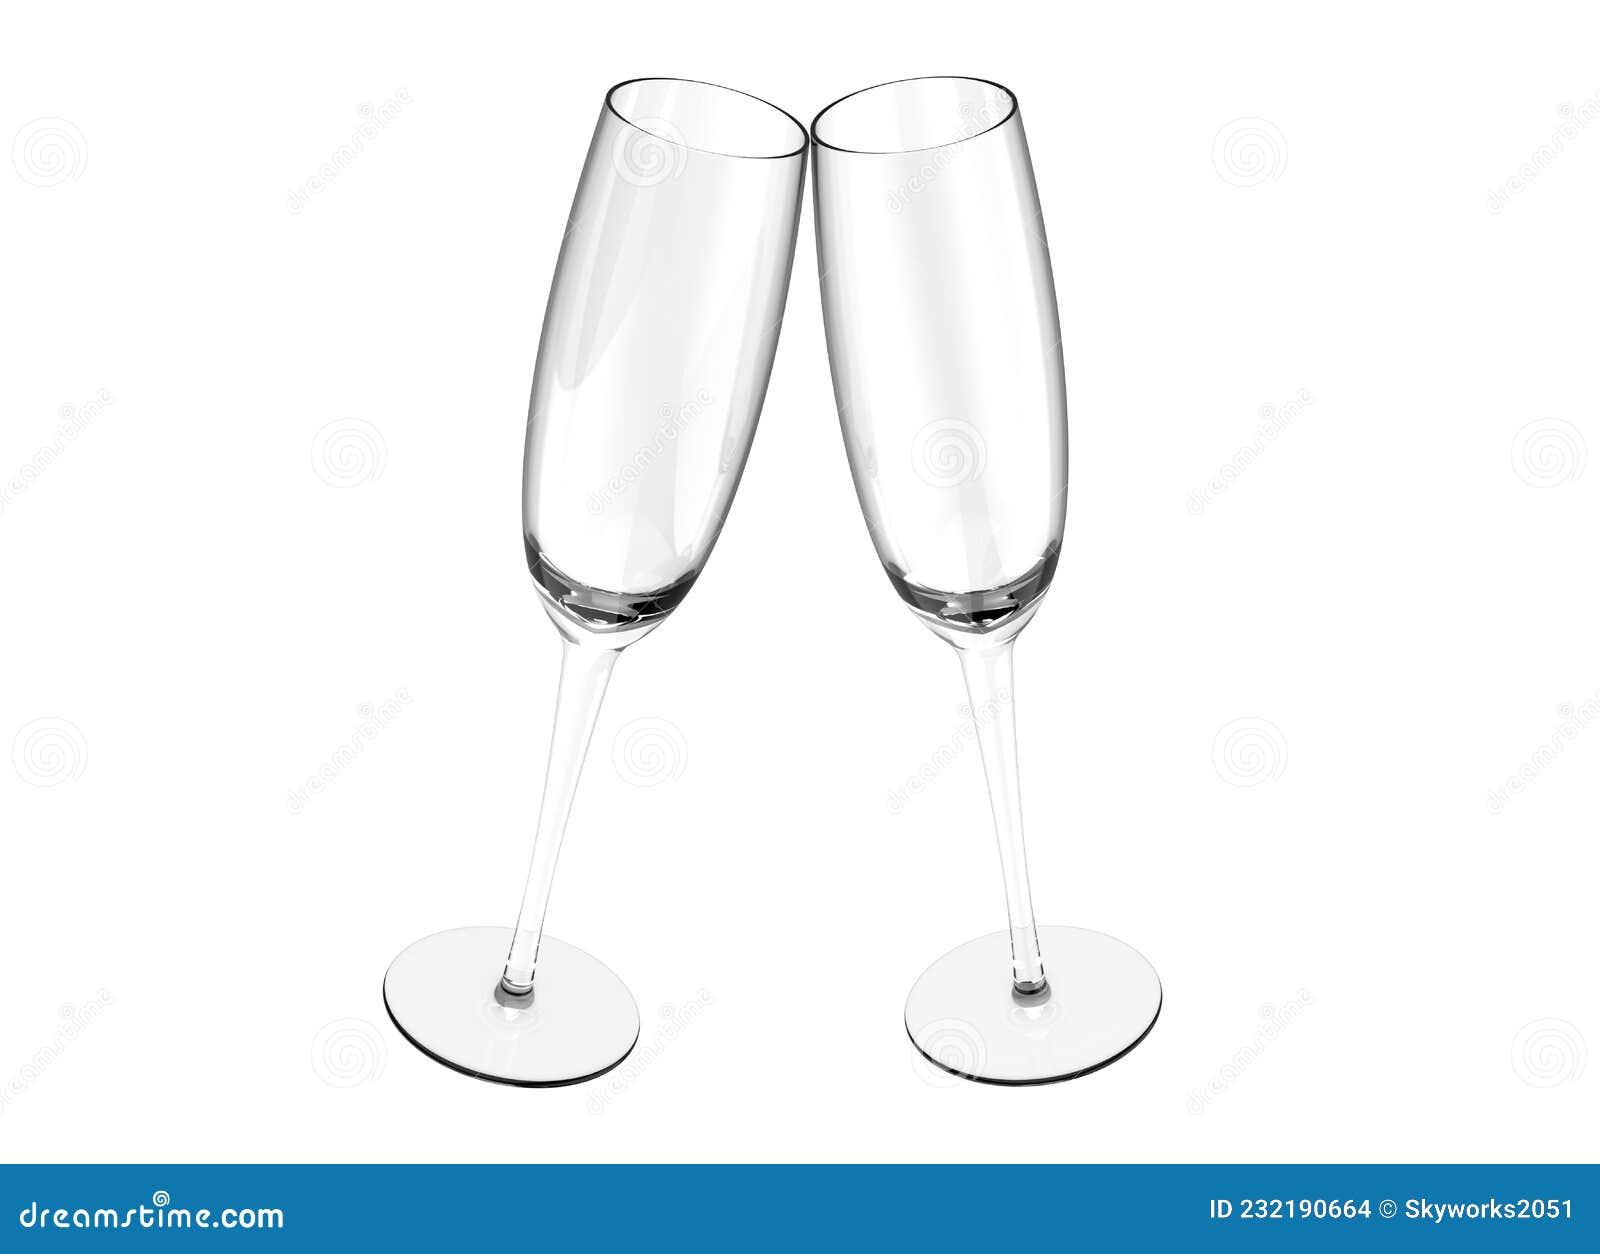 Toasting Glasses Two Elegant Champagne Glasses Pair Of Champagne Glasses Clink Glasses Toast